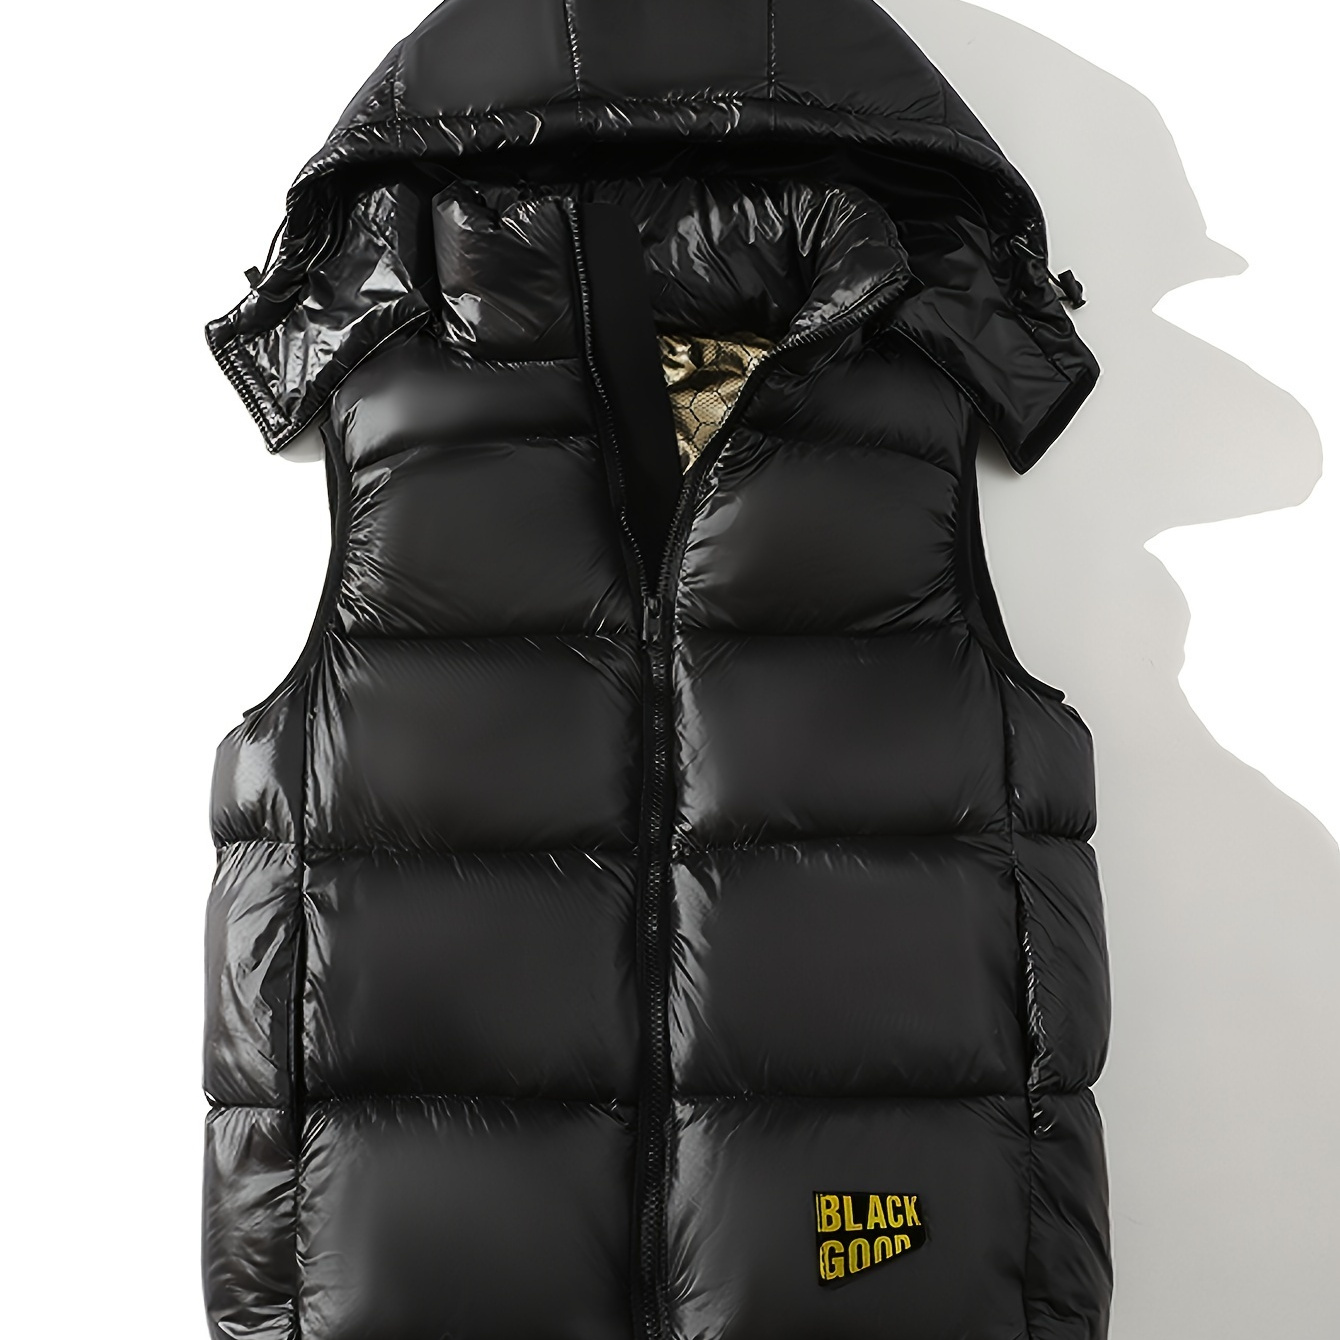 

Men's Solid Sleeveless Puffer Coat With Pockets, Casual Zip Up Warm Hooded Vest For Winter Outdoor Activities